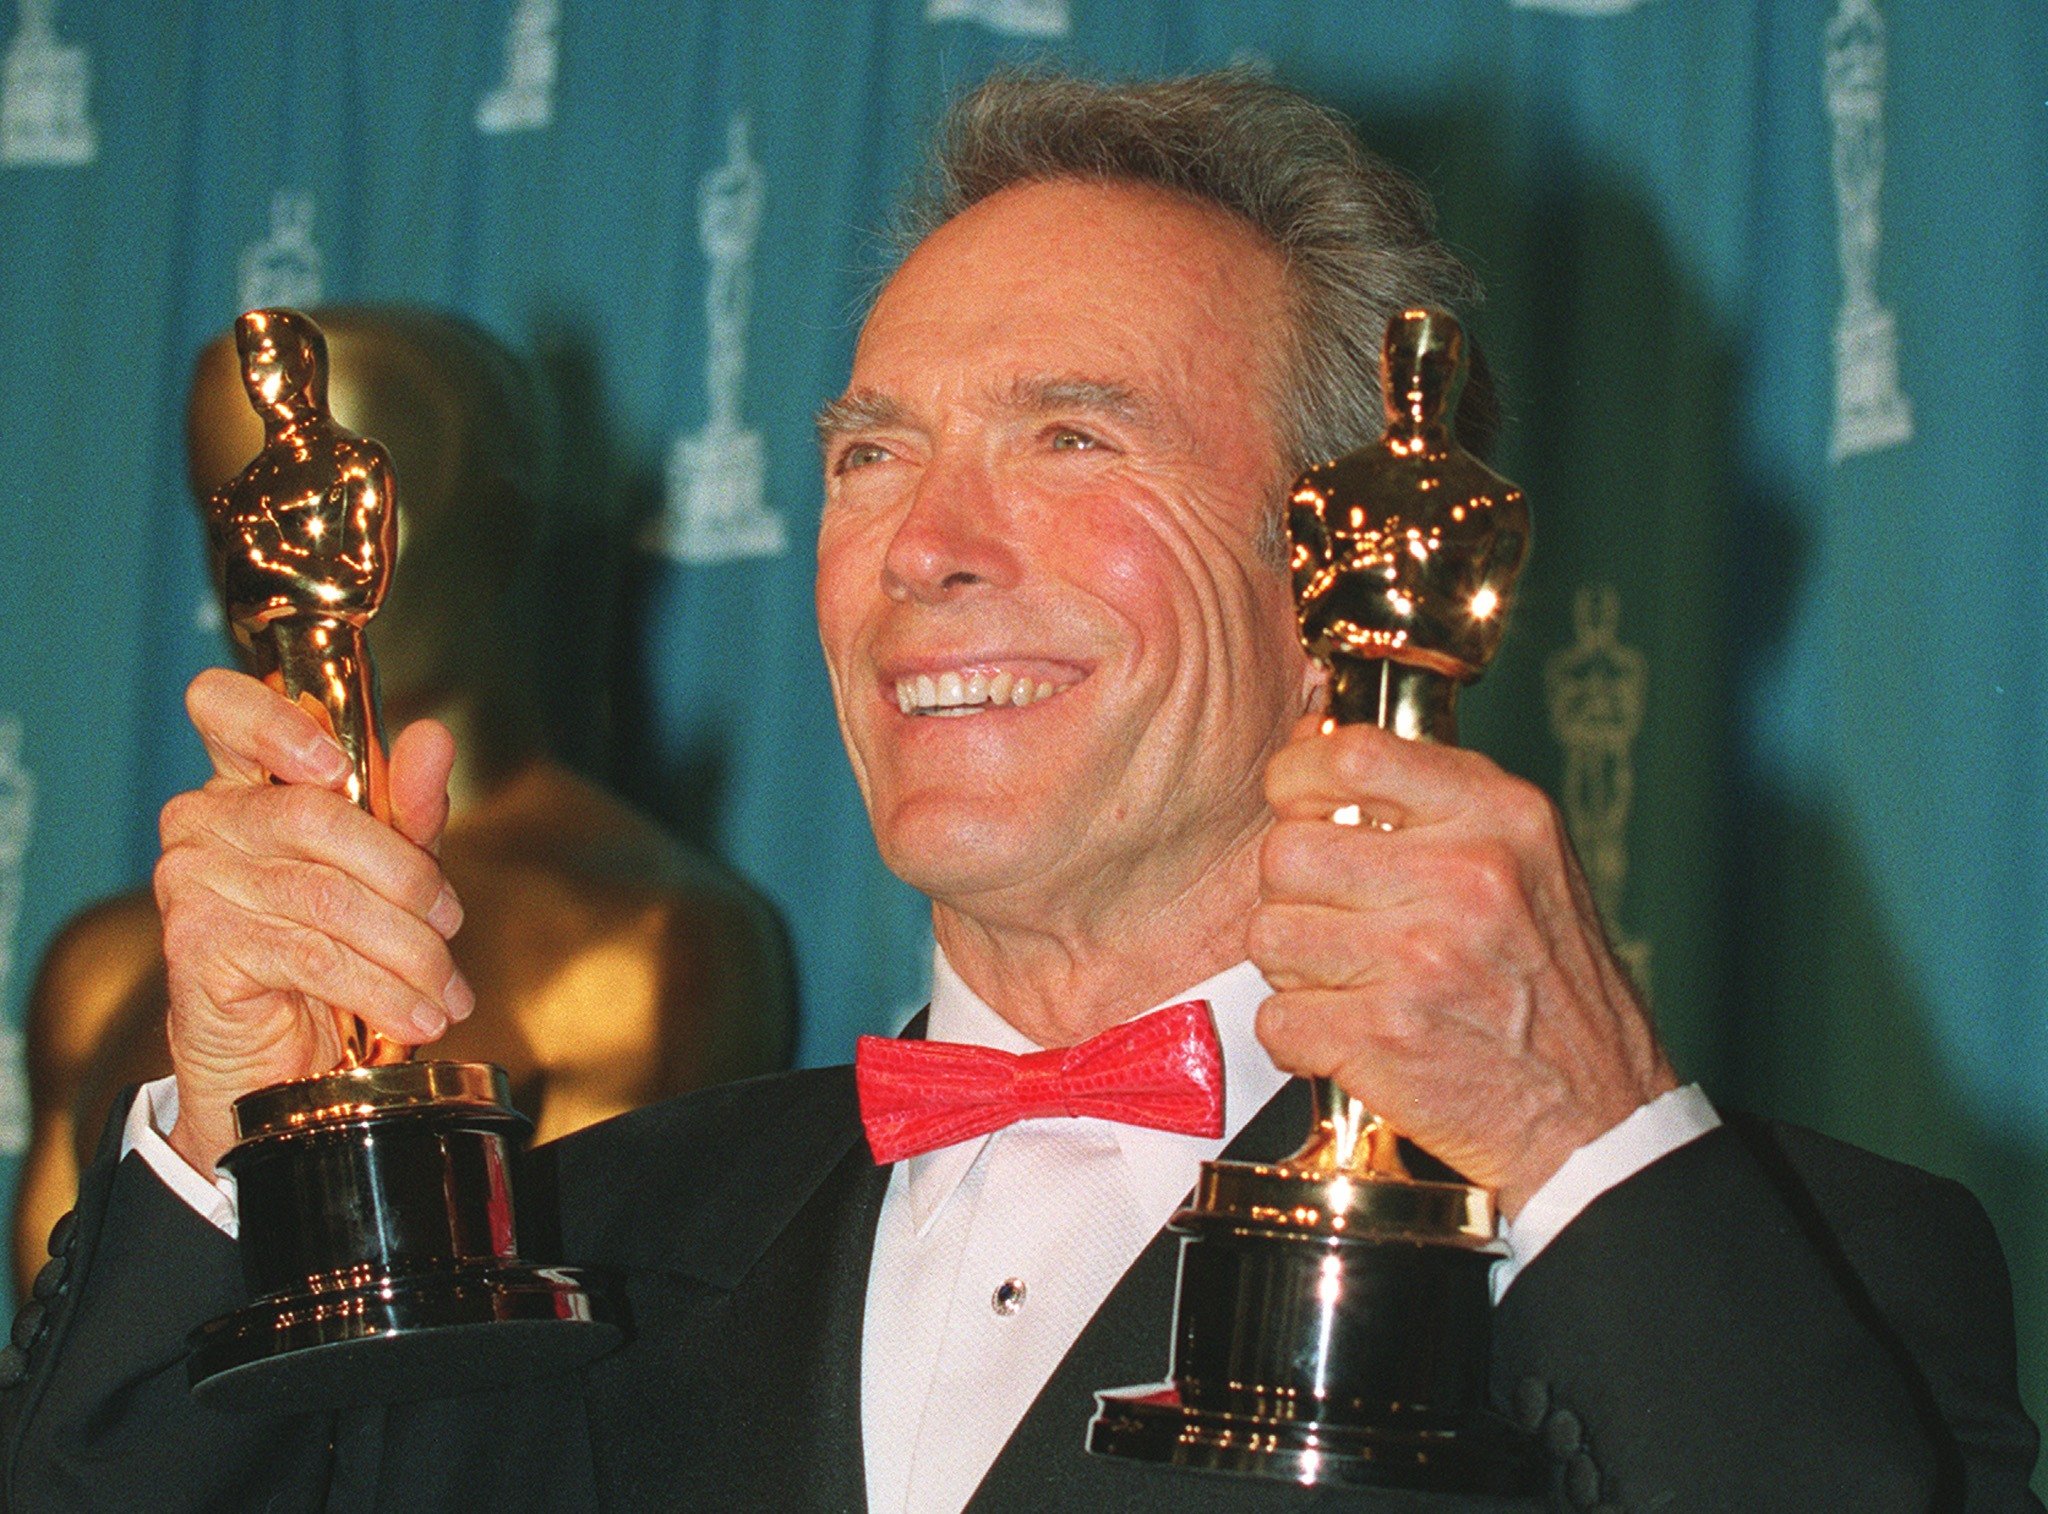 Actor/director Clint Eastwood